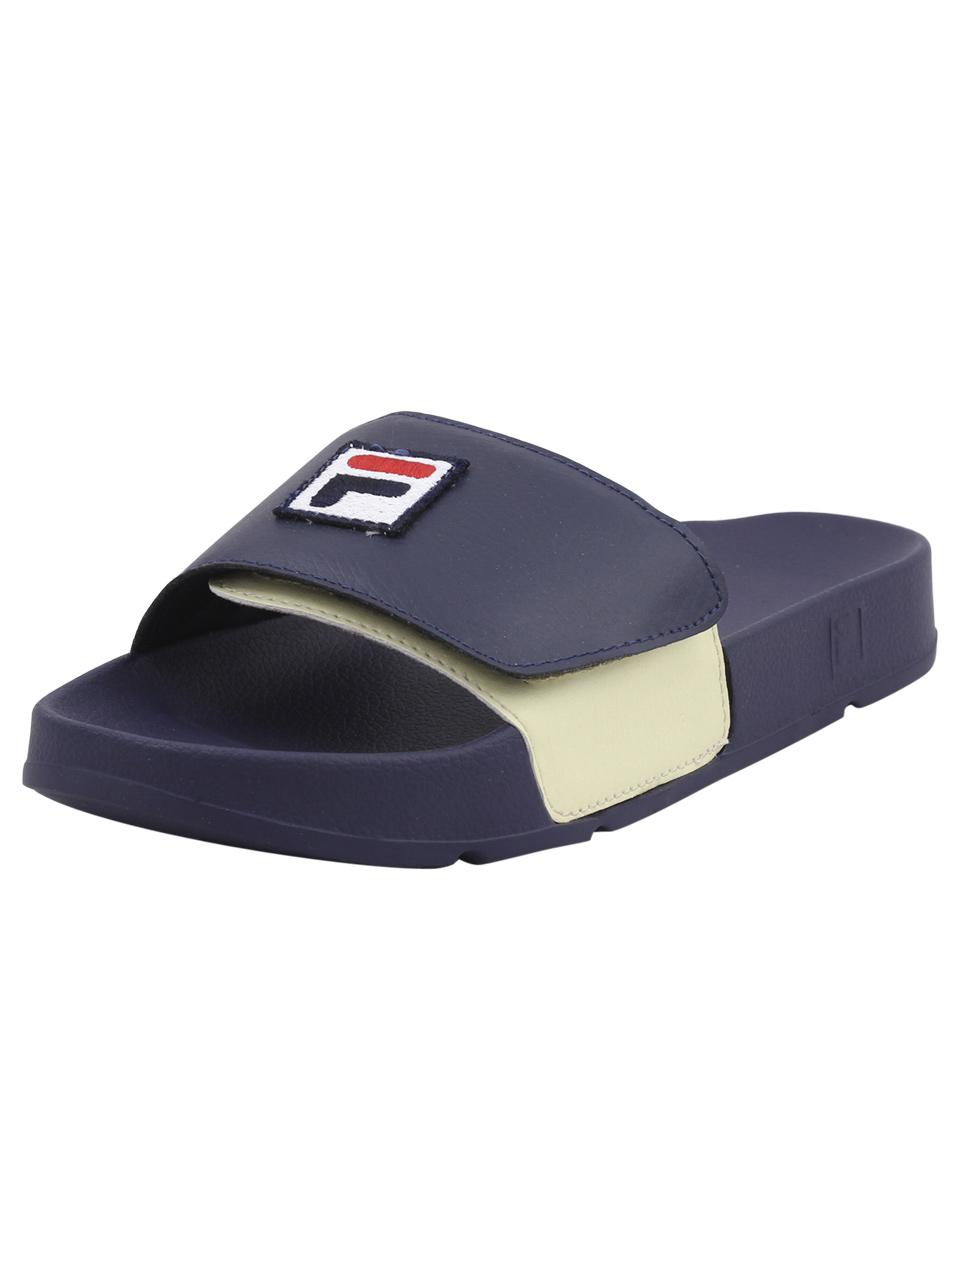 Fila Men's Drifter Strap Slides Sandals Shoes - Fila Navy/Fila Red/Fila Cream - 11 D(M) US